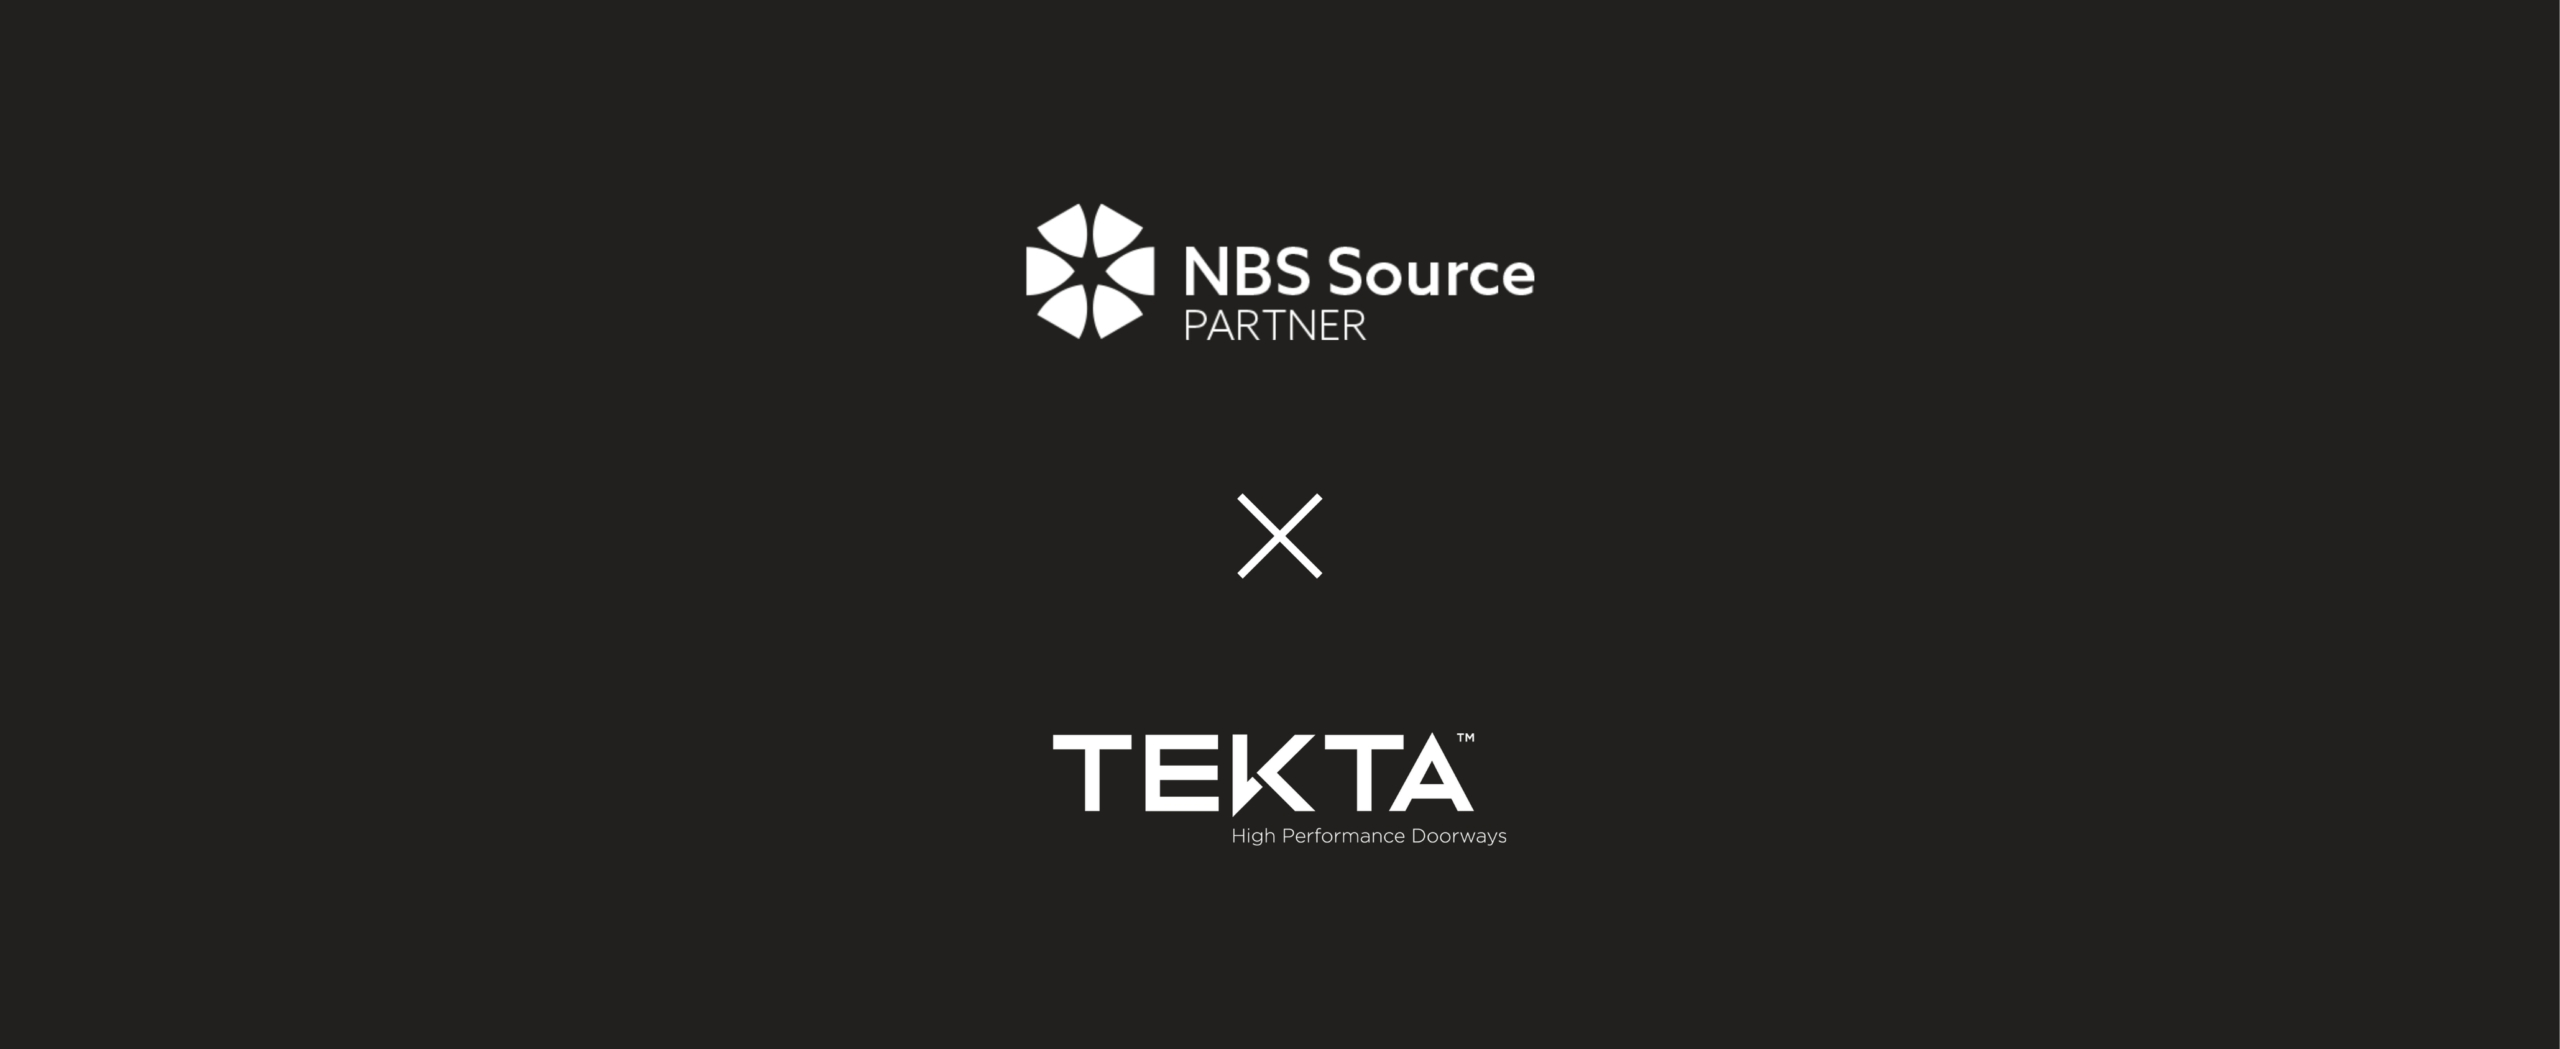 Tekta logo and NBS Partner logo on a black background.